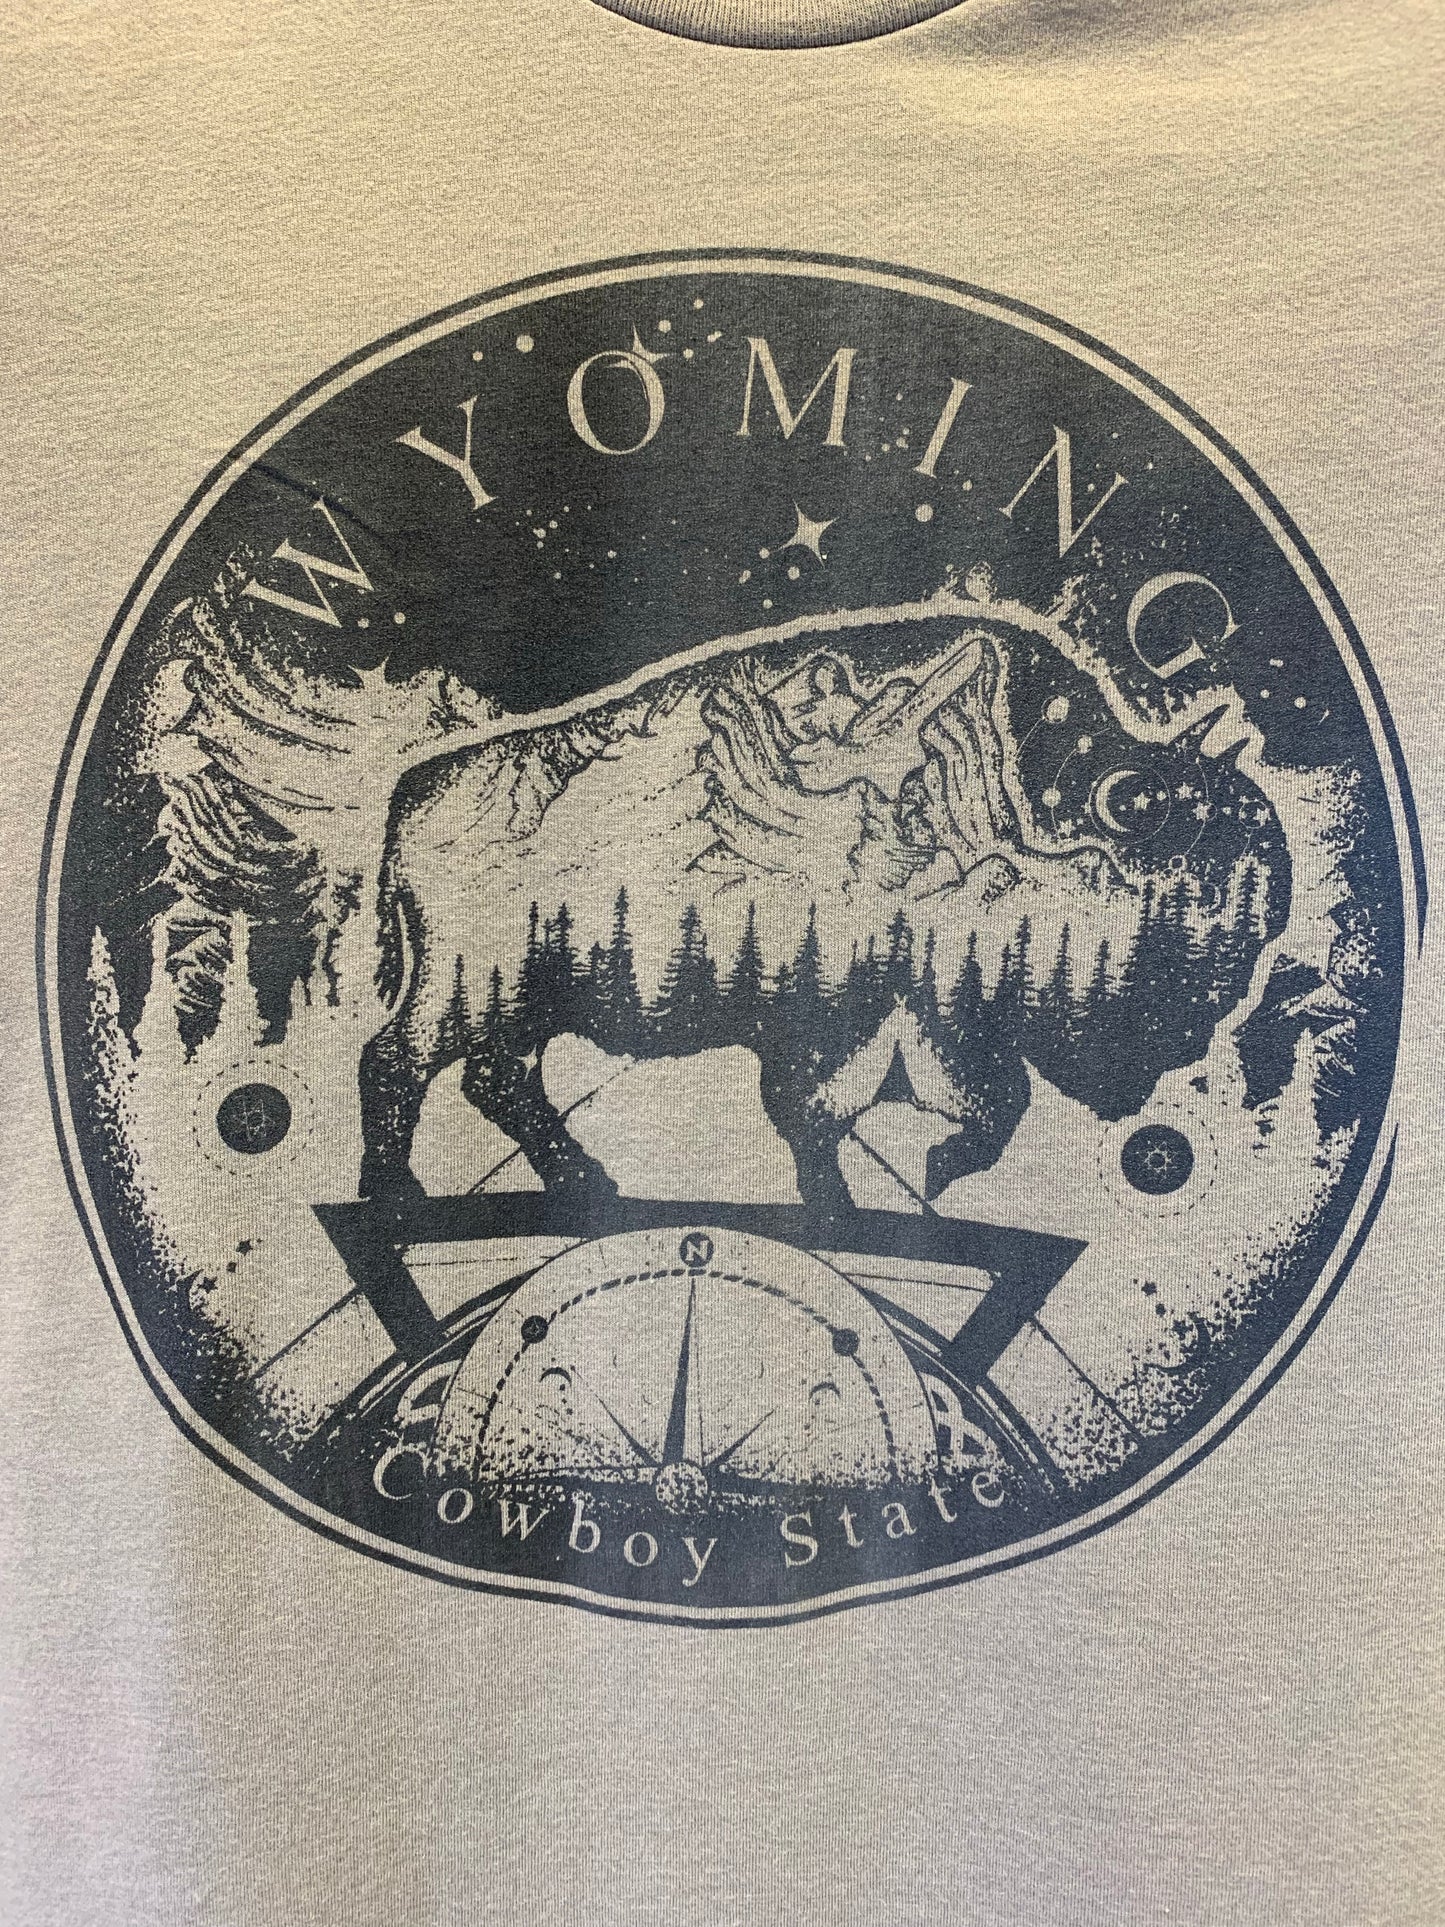 Wyoming Cowboy State Buffalo Adult Unisex T-shirt